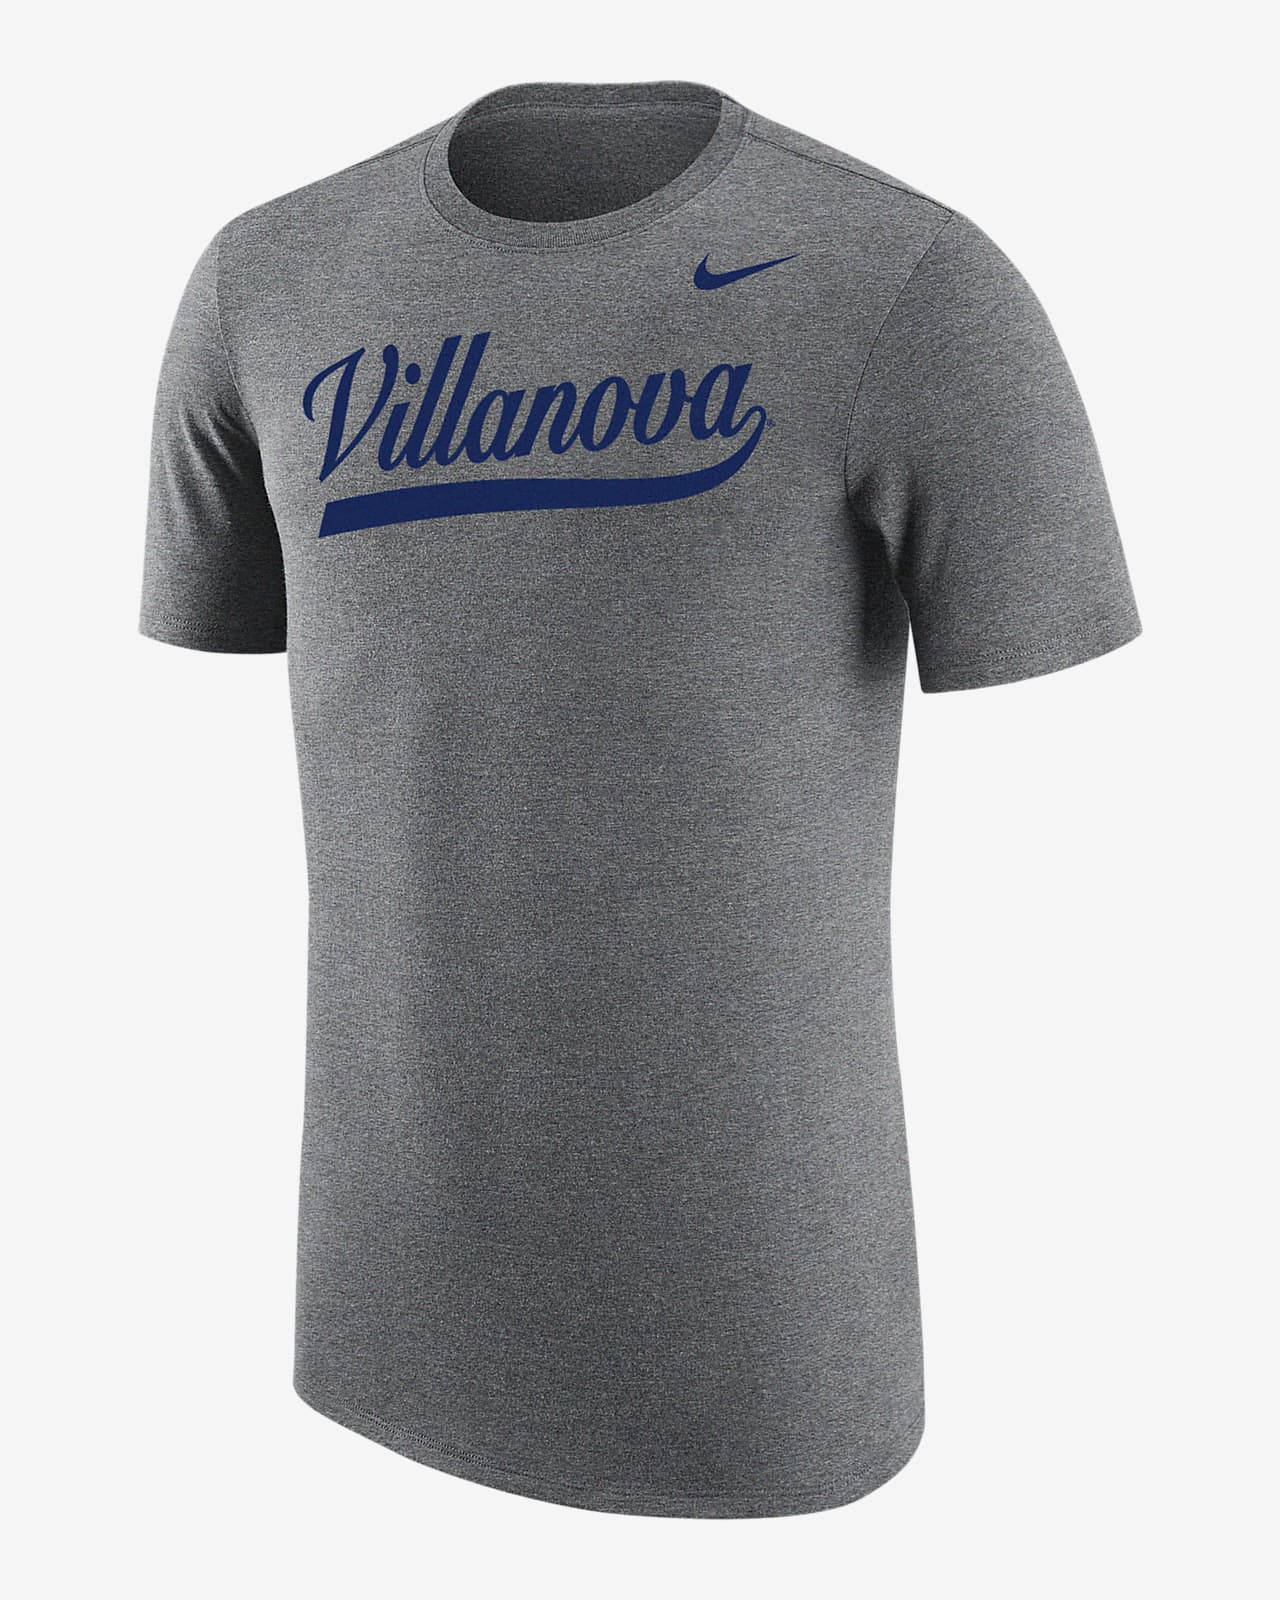 Playera Nike College para hombre Villanova